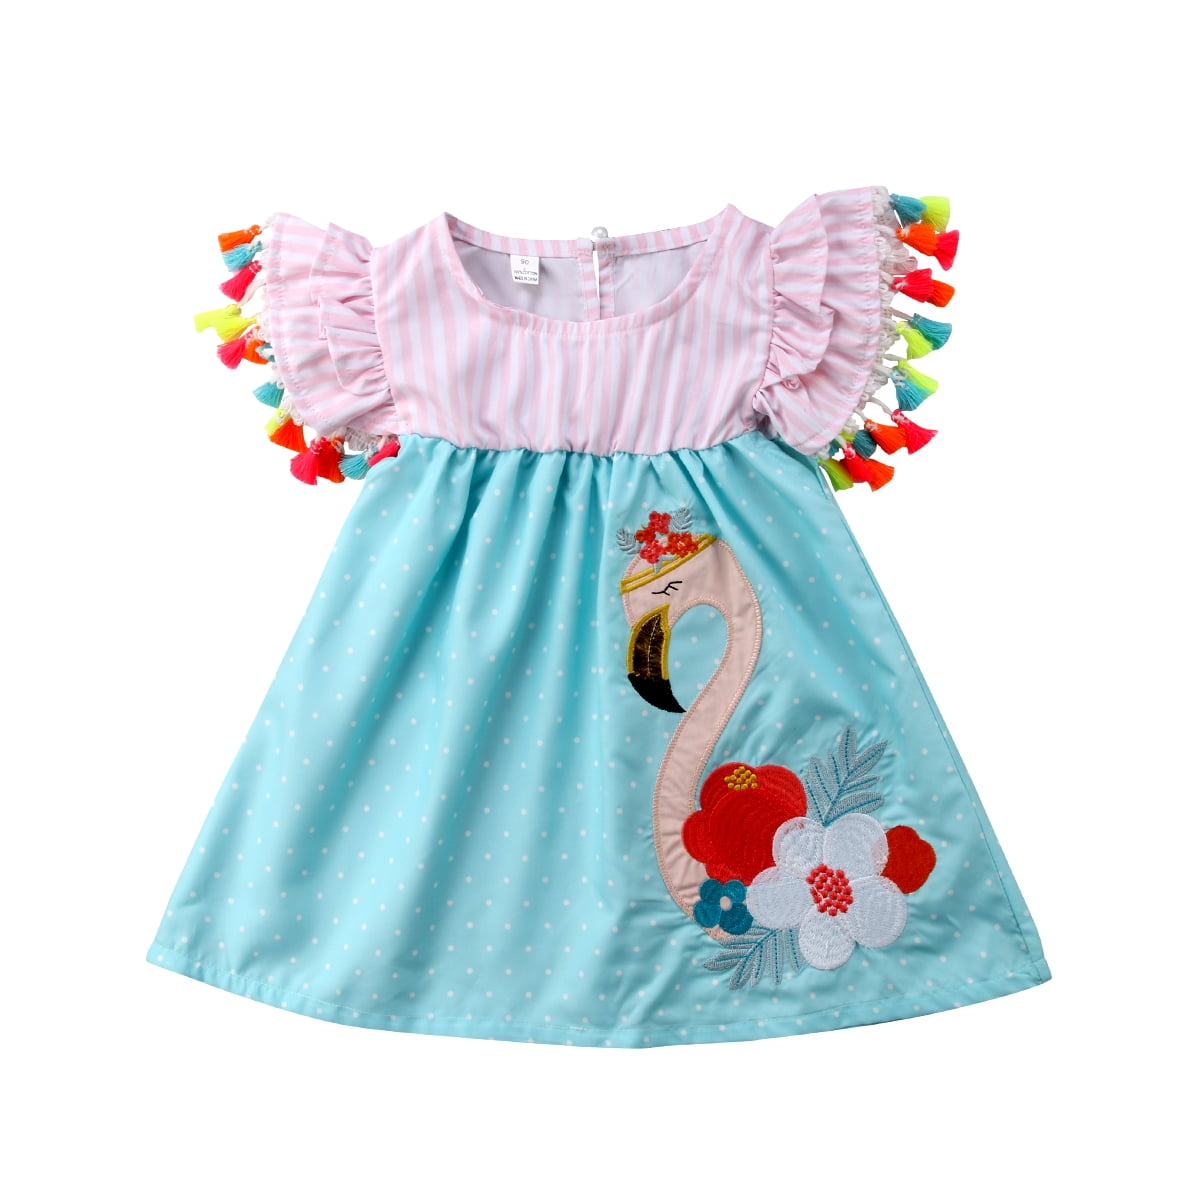 Details about  / Flamingo Tutu Girls Dress Dance Clothes Baby Kids Christmas angel Party Dresses